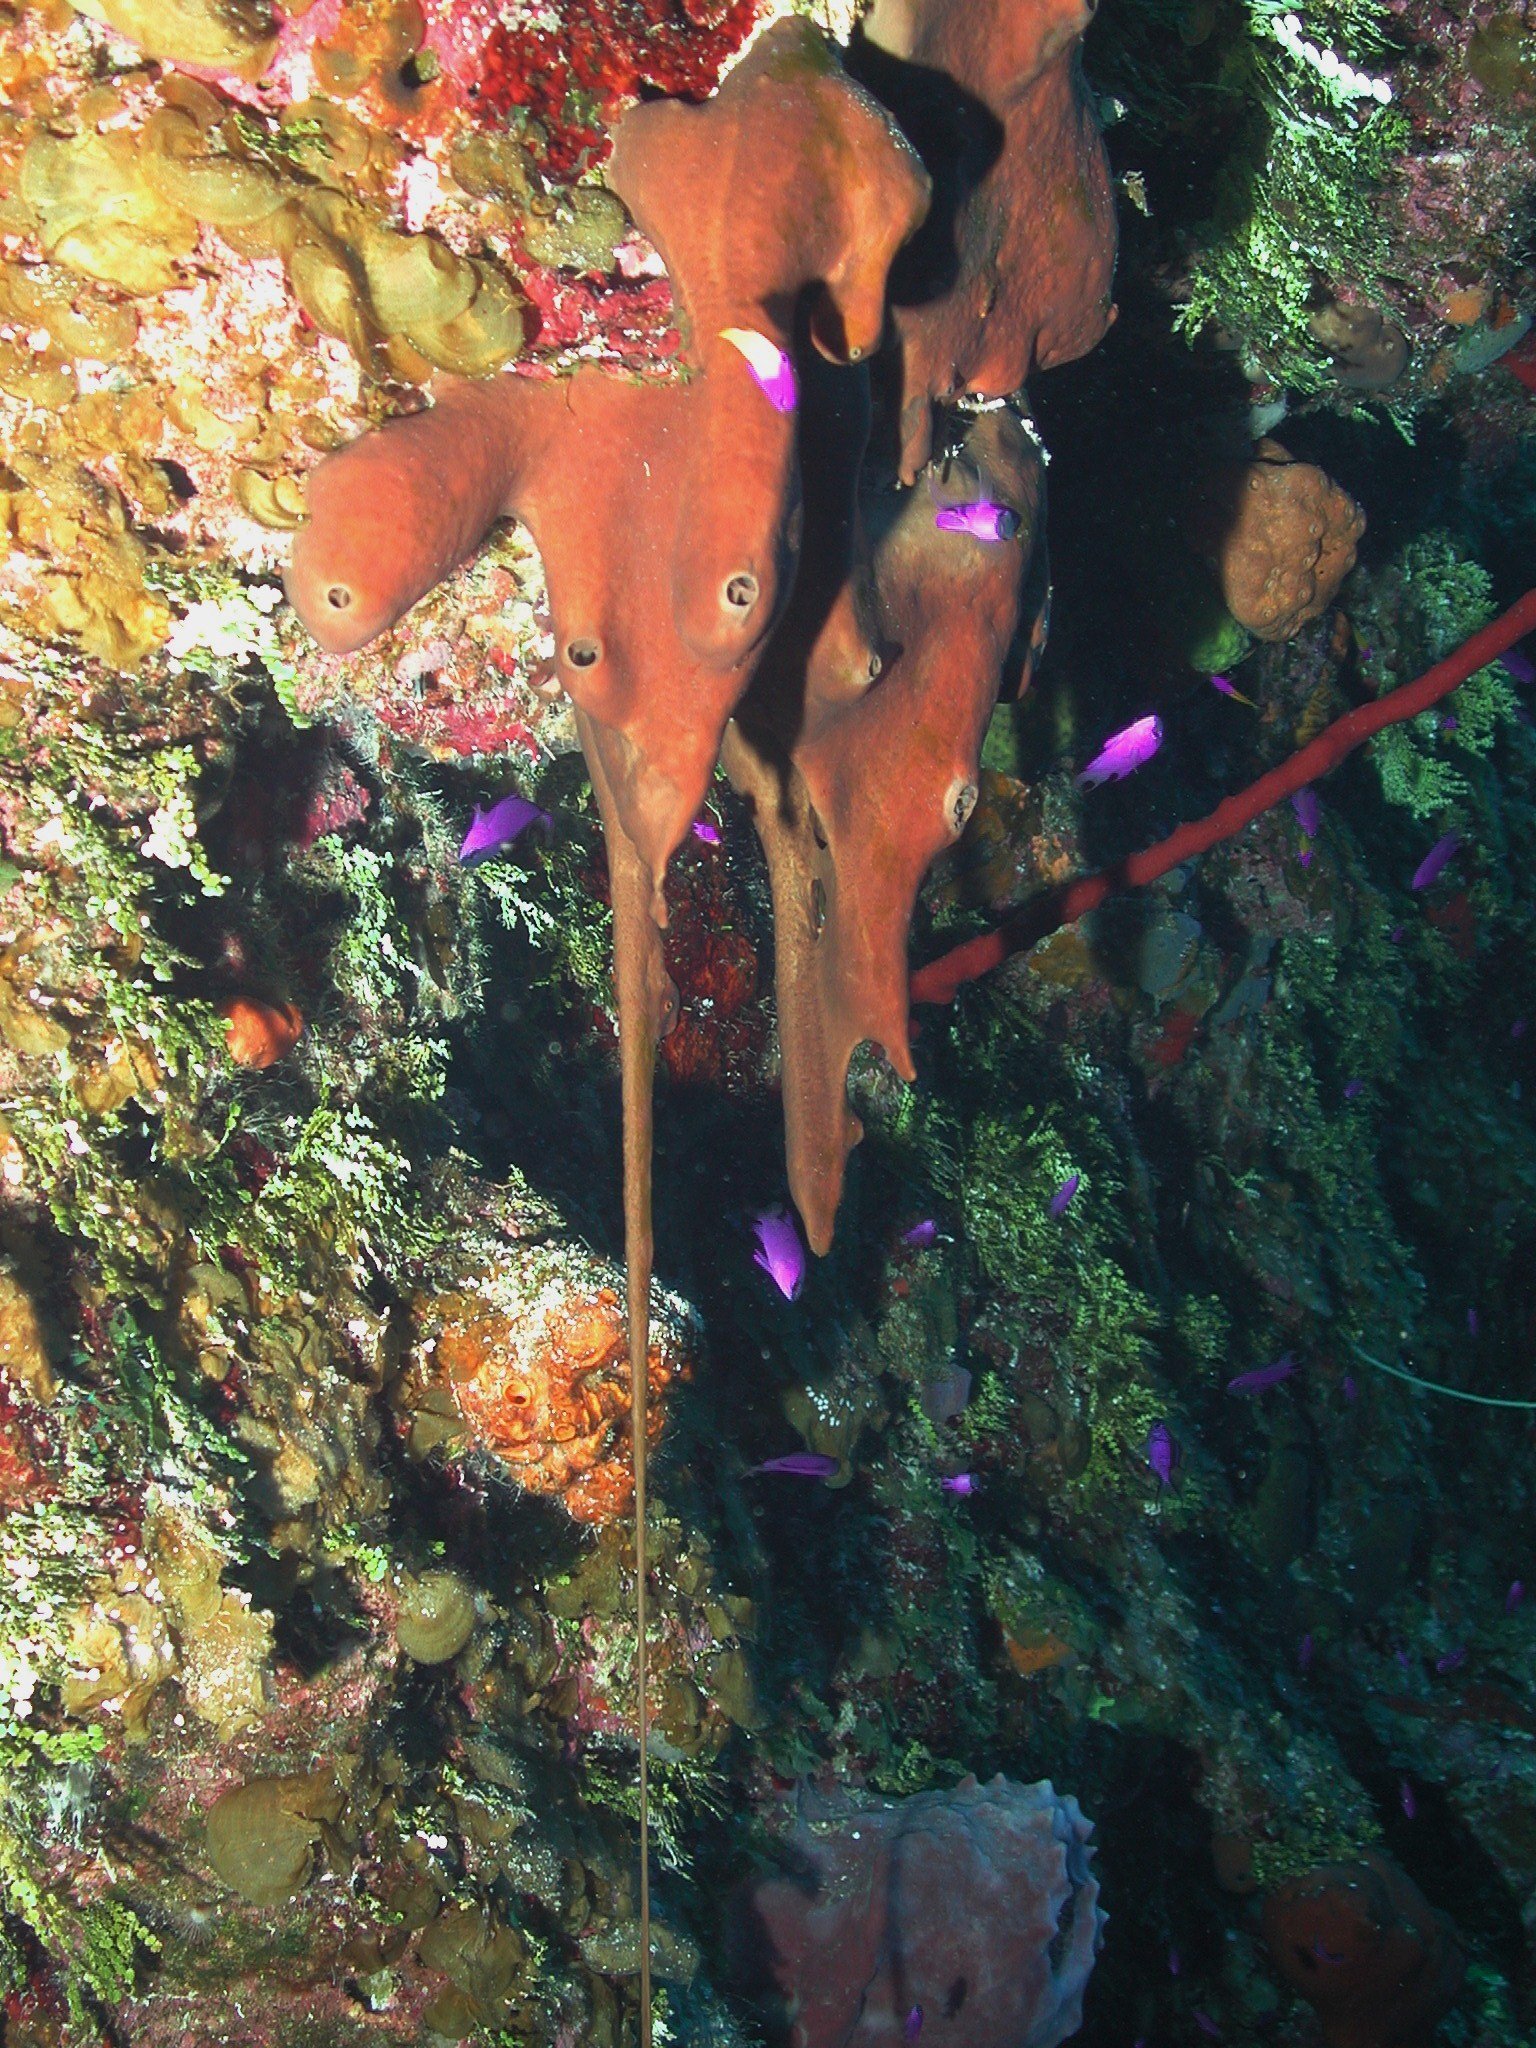 Liver Sponge on Coral Reef/ NOAA